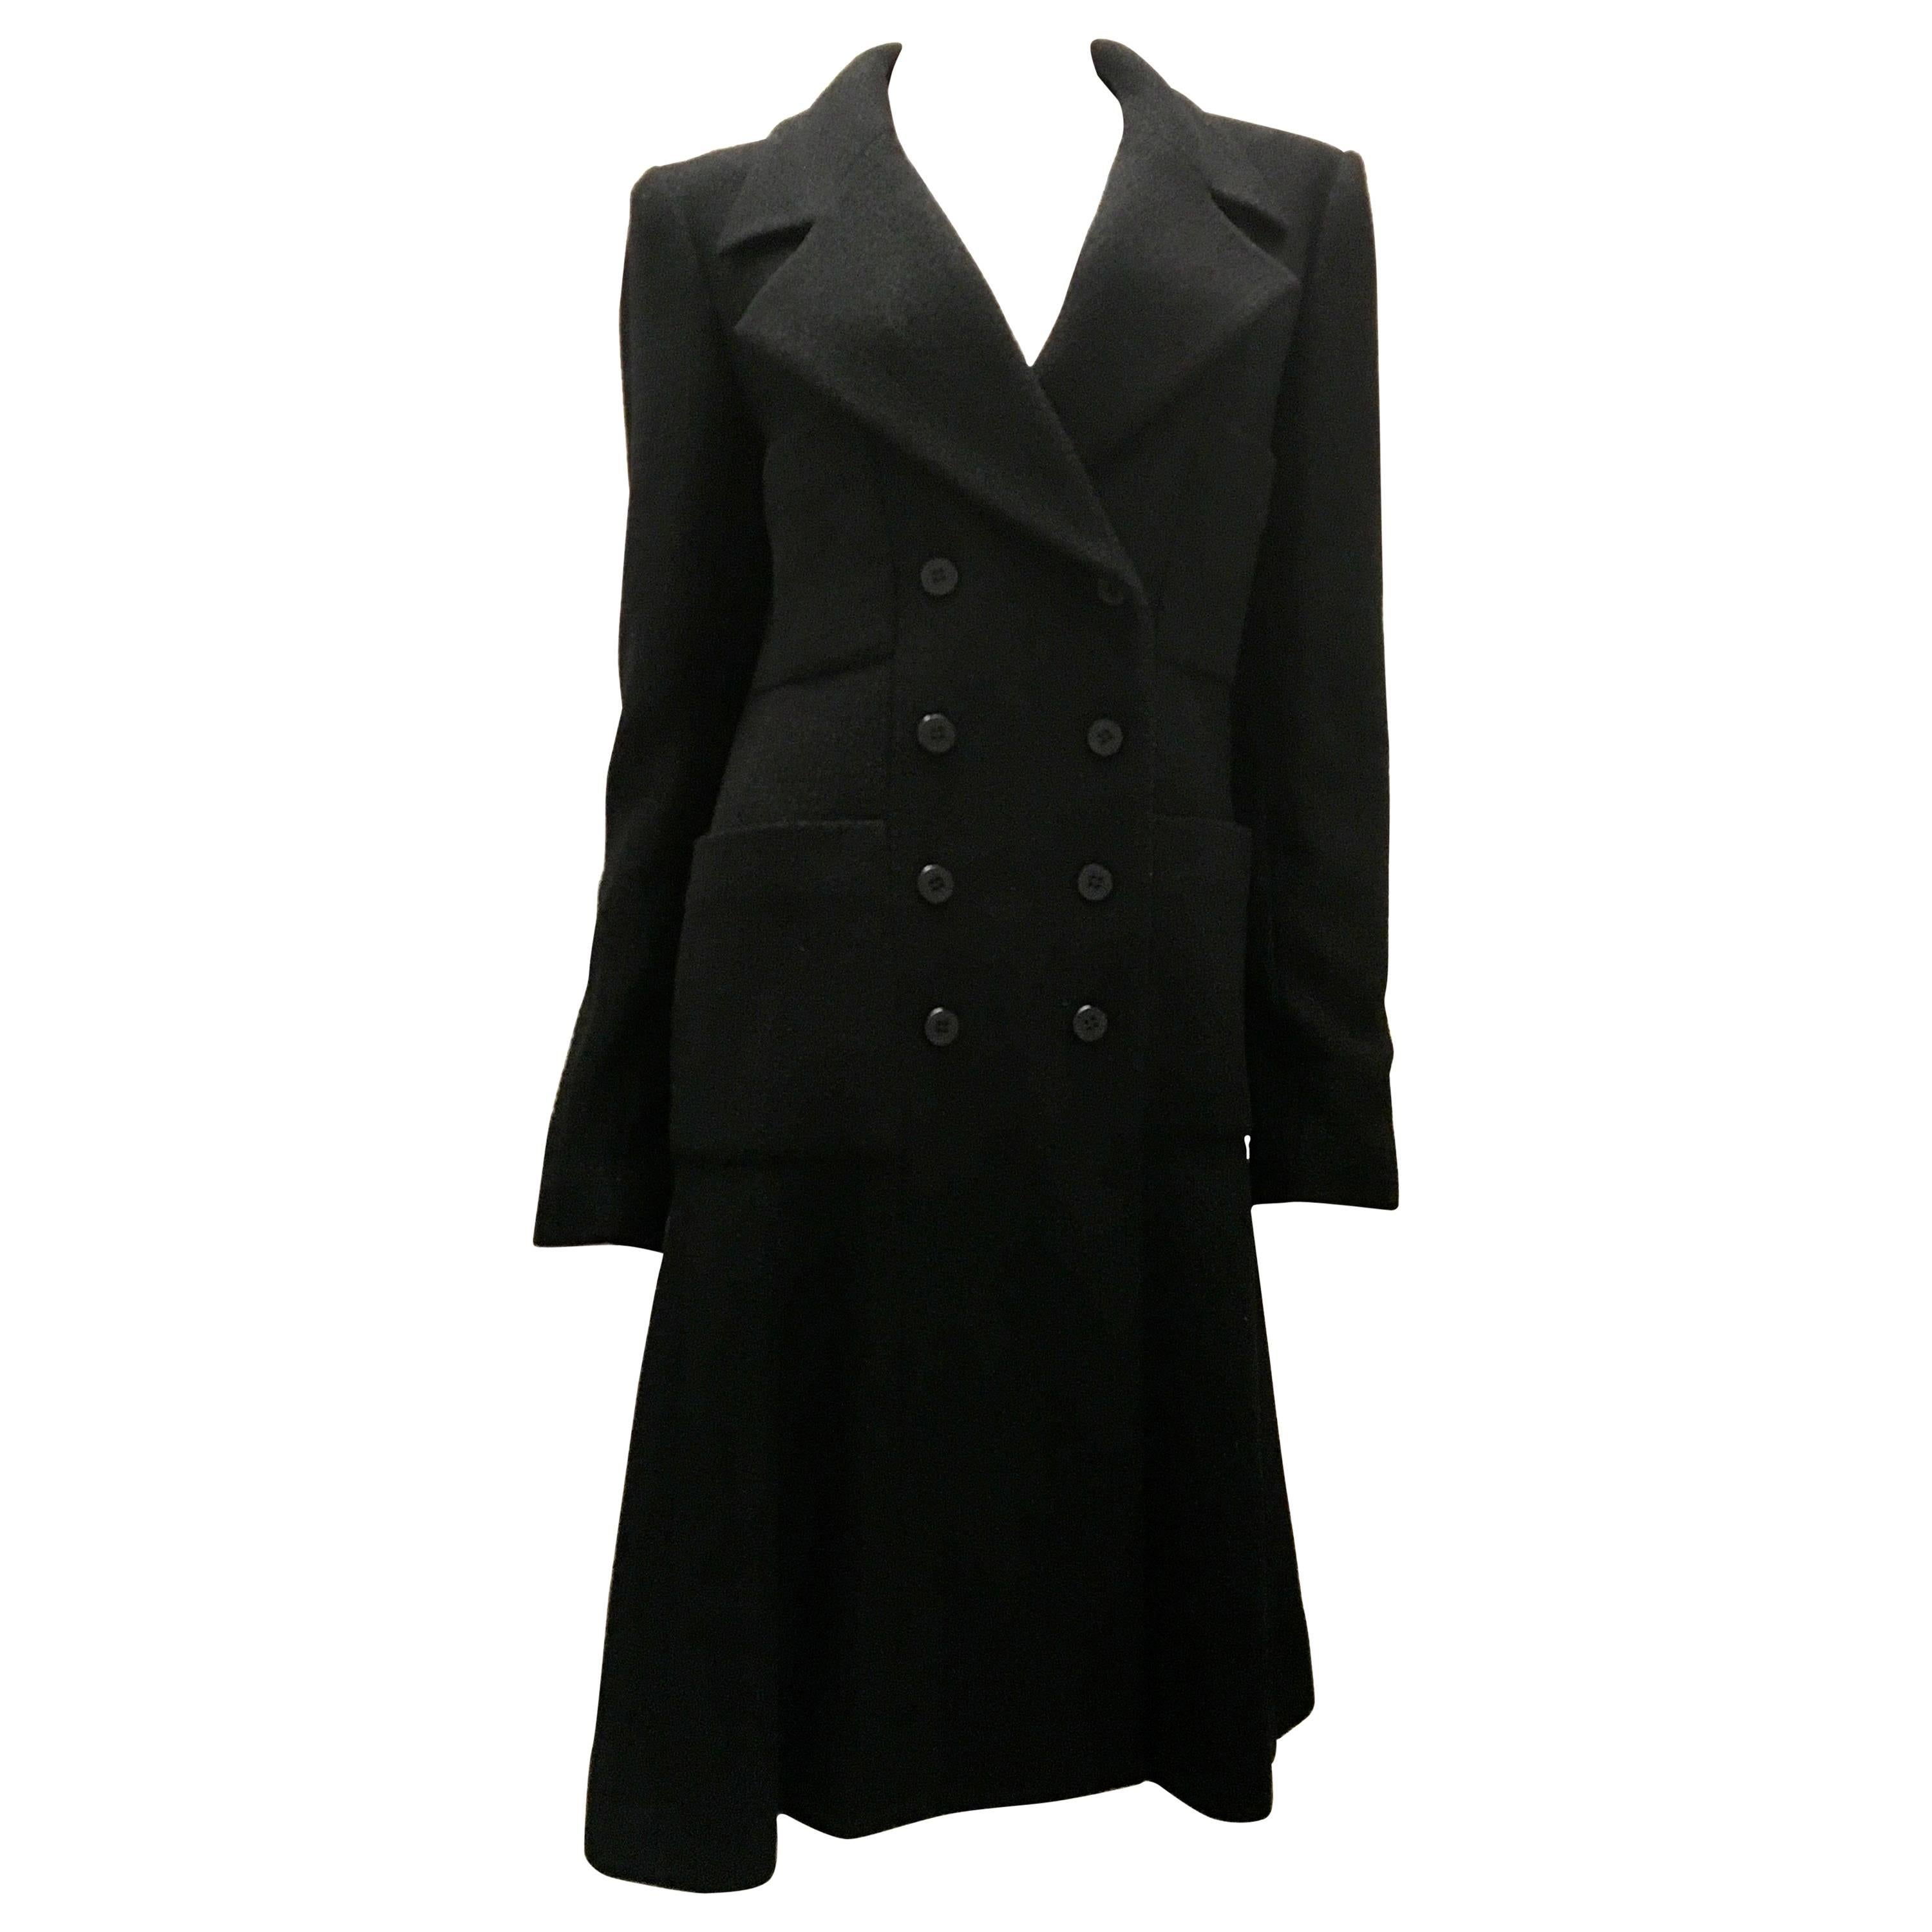 Magnificent Chanel Long Black Coat - Size 38